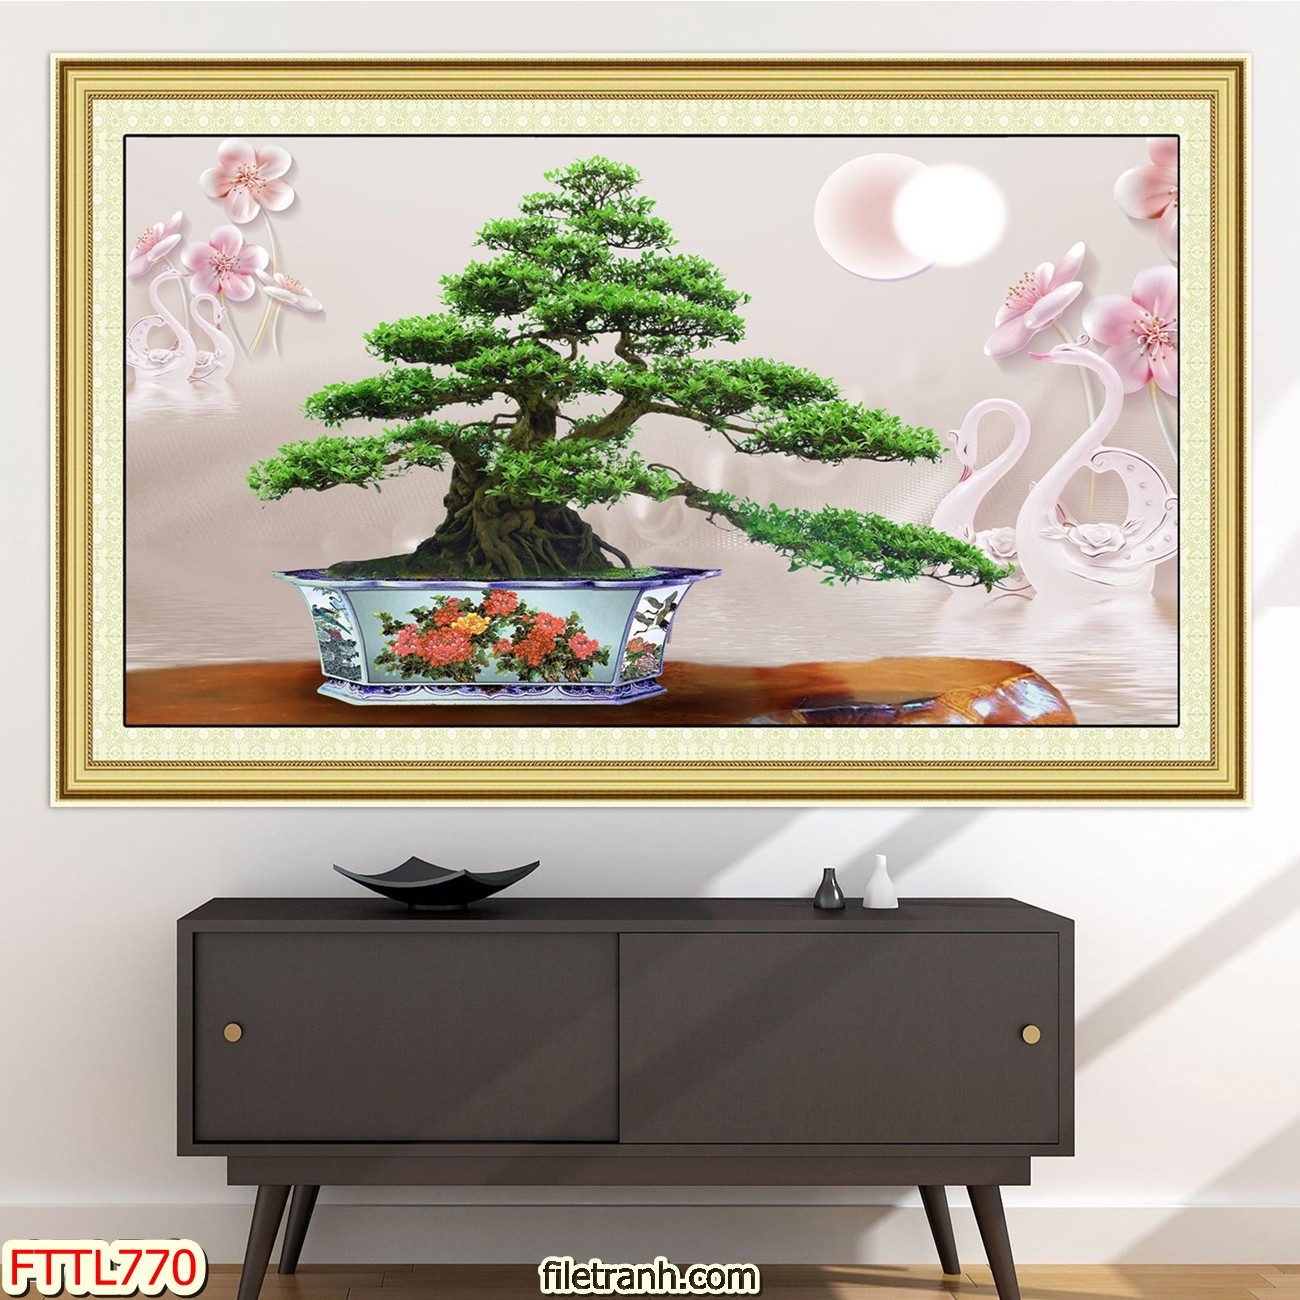 https://filetranh.com/file-tranh-chau-mai-bonsai/file-tranh-chau-mai-bonsai-fttl770.html